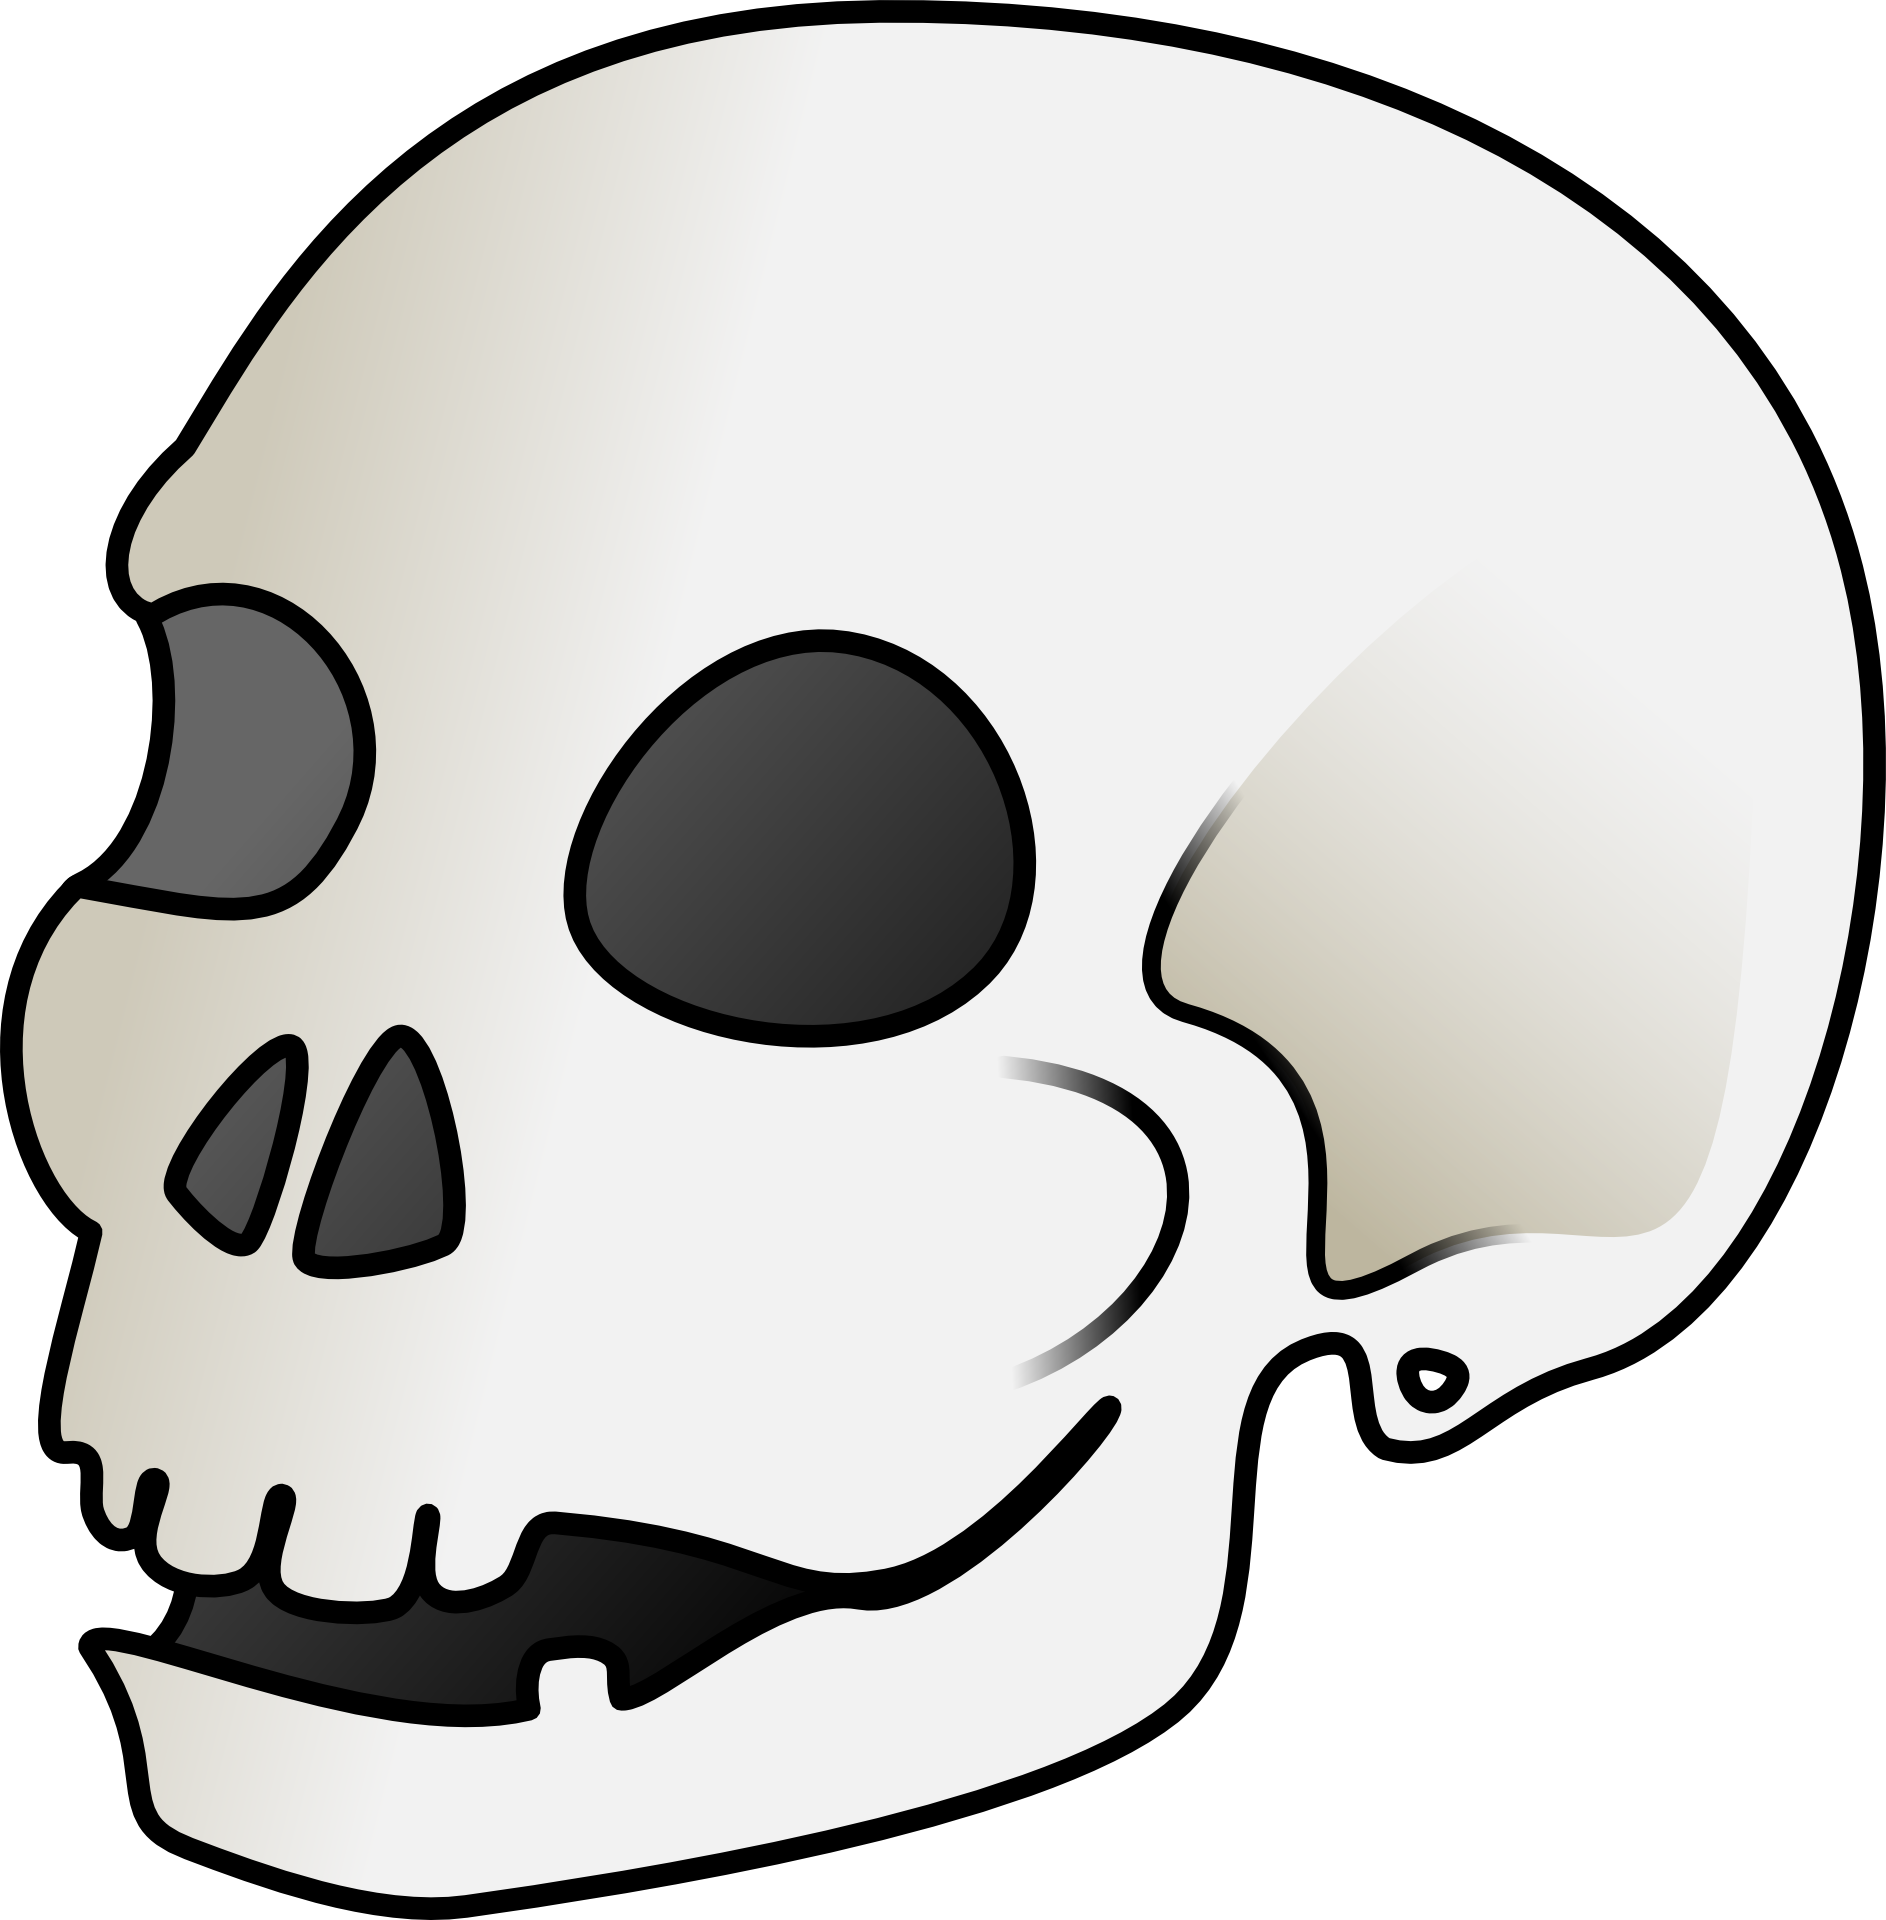 Skull bones anatomy drawing free image download